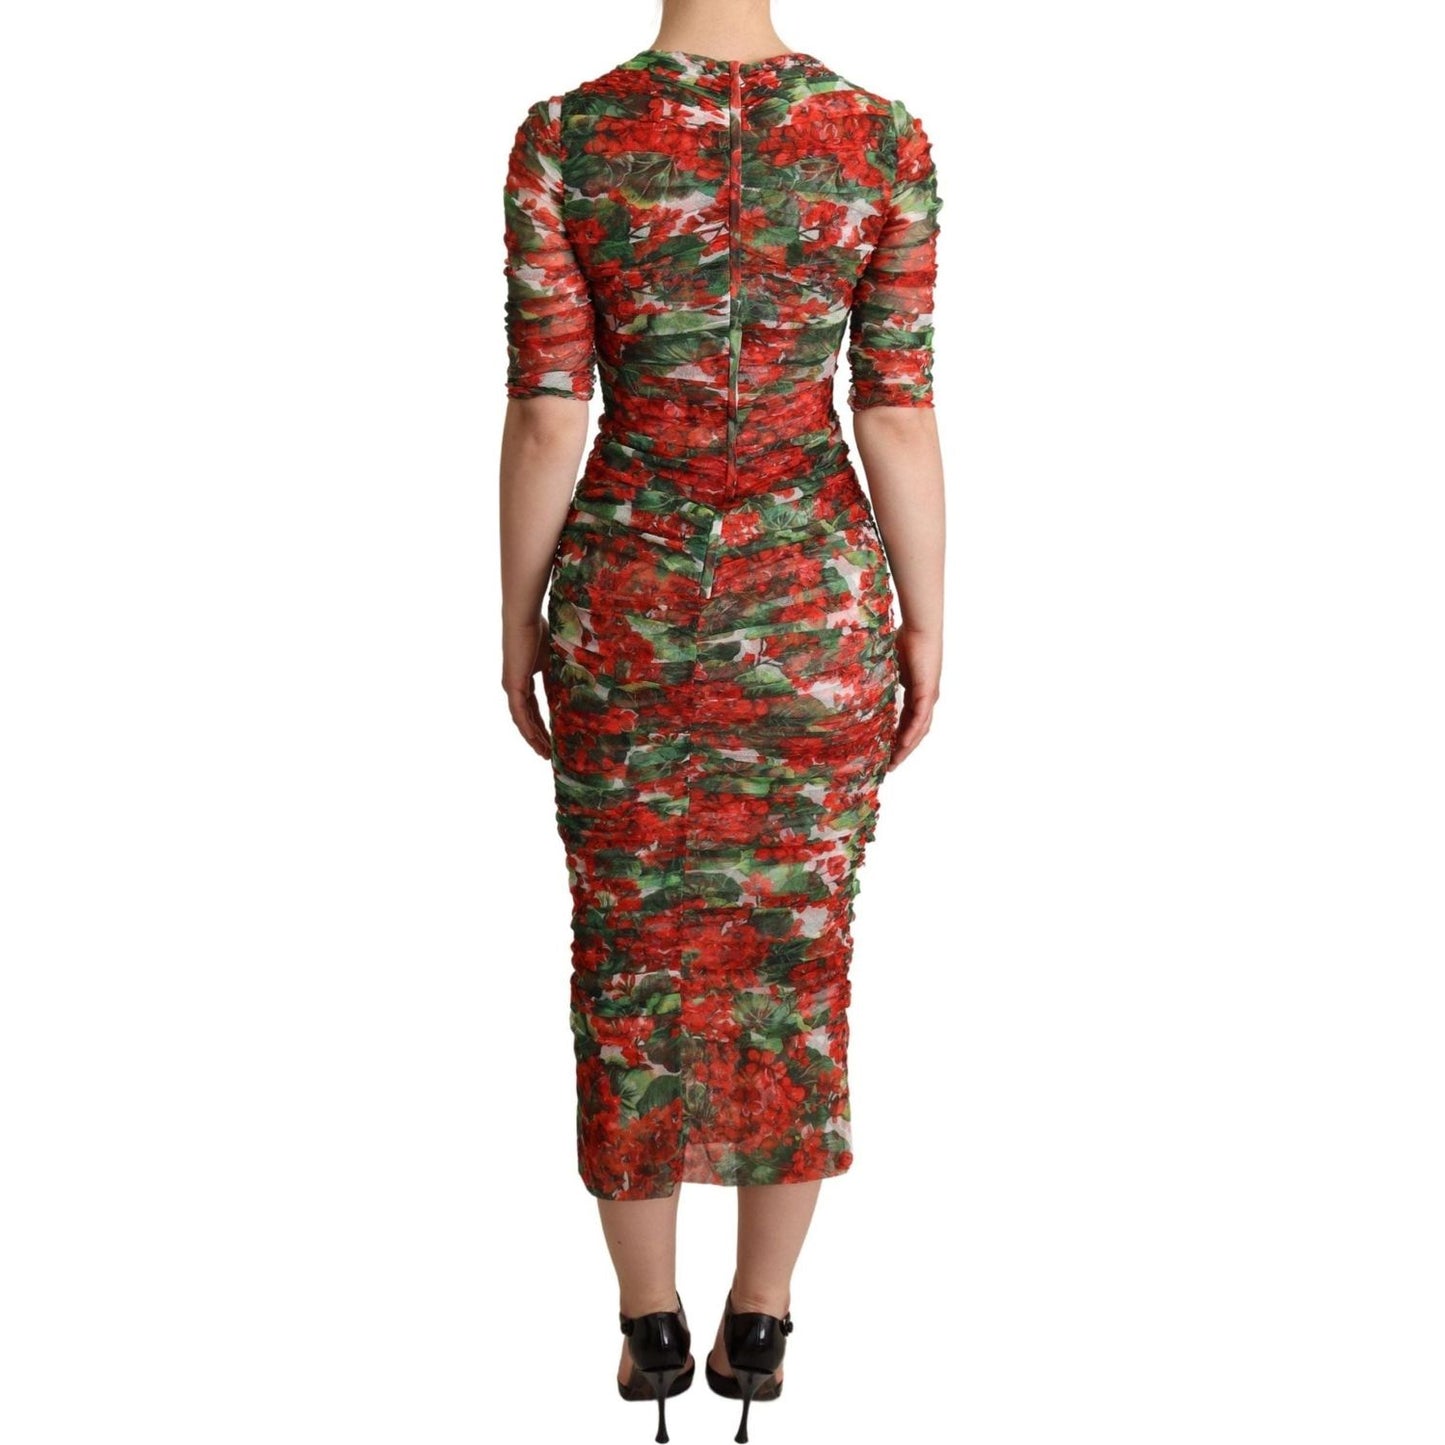 Dolce & Gabbana Elegant Red Floral Midi Sheath Dress WOMAN DRESSES red-floral-print-tulle-sheath-midi-dress IMG_0145-scaled-e01b3a8f-c06.jpg